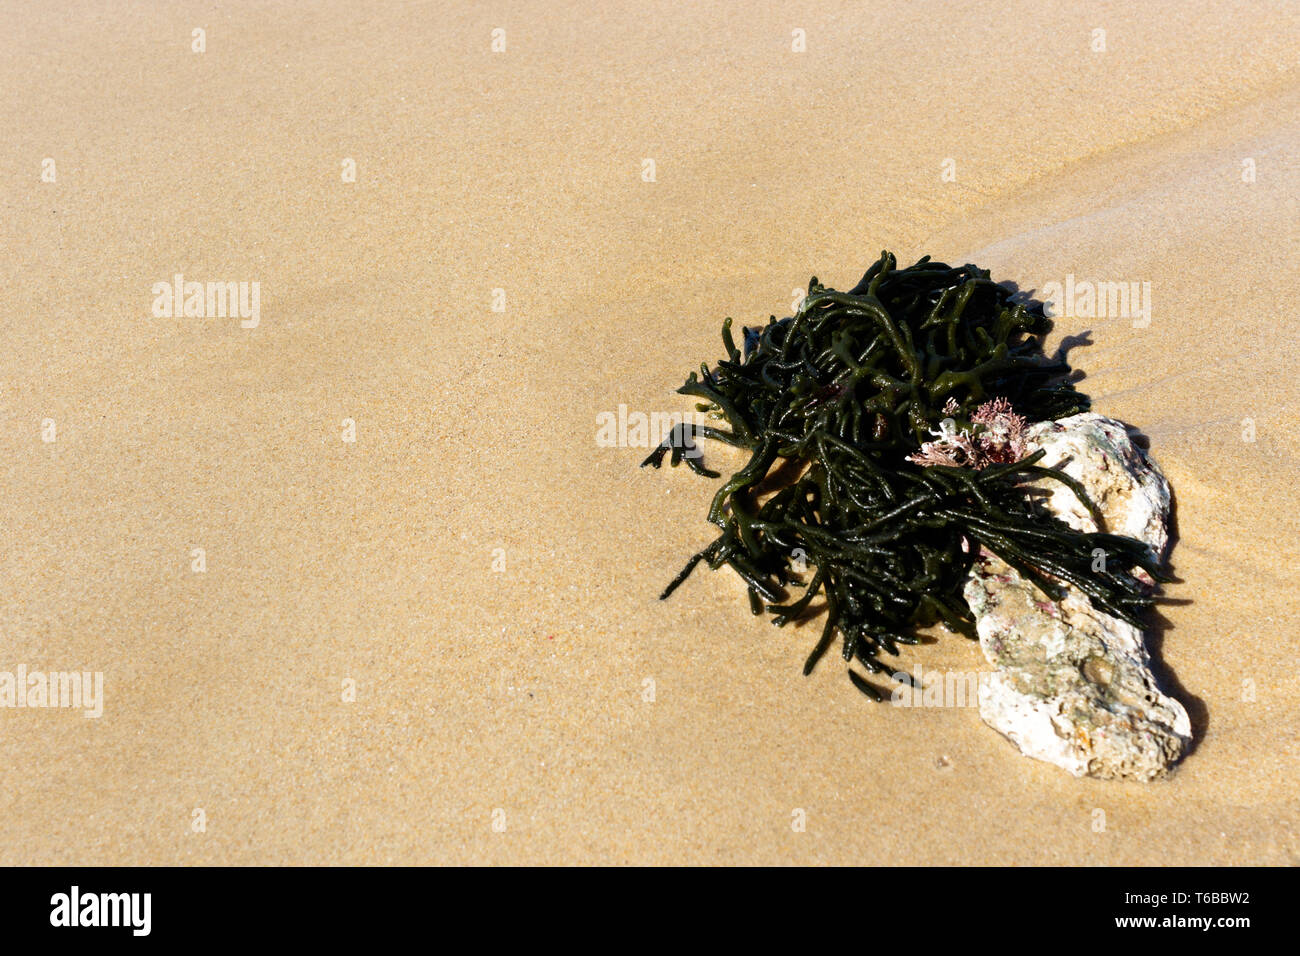 Green seaweed on the sand Stock Photo